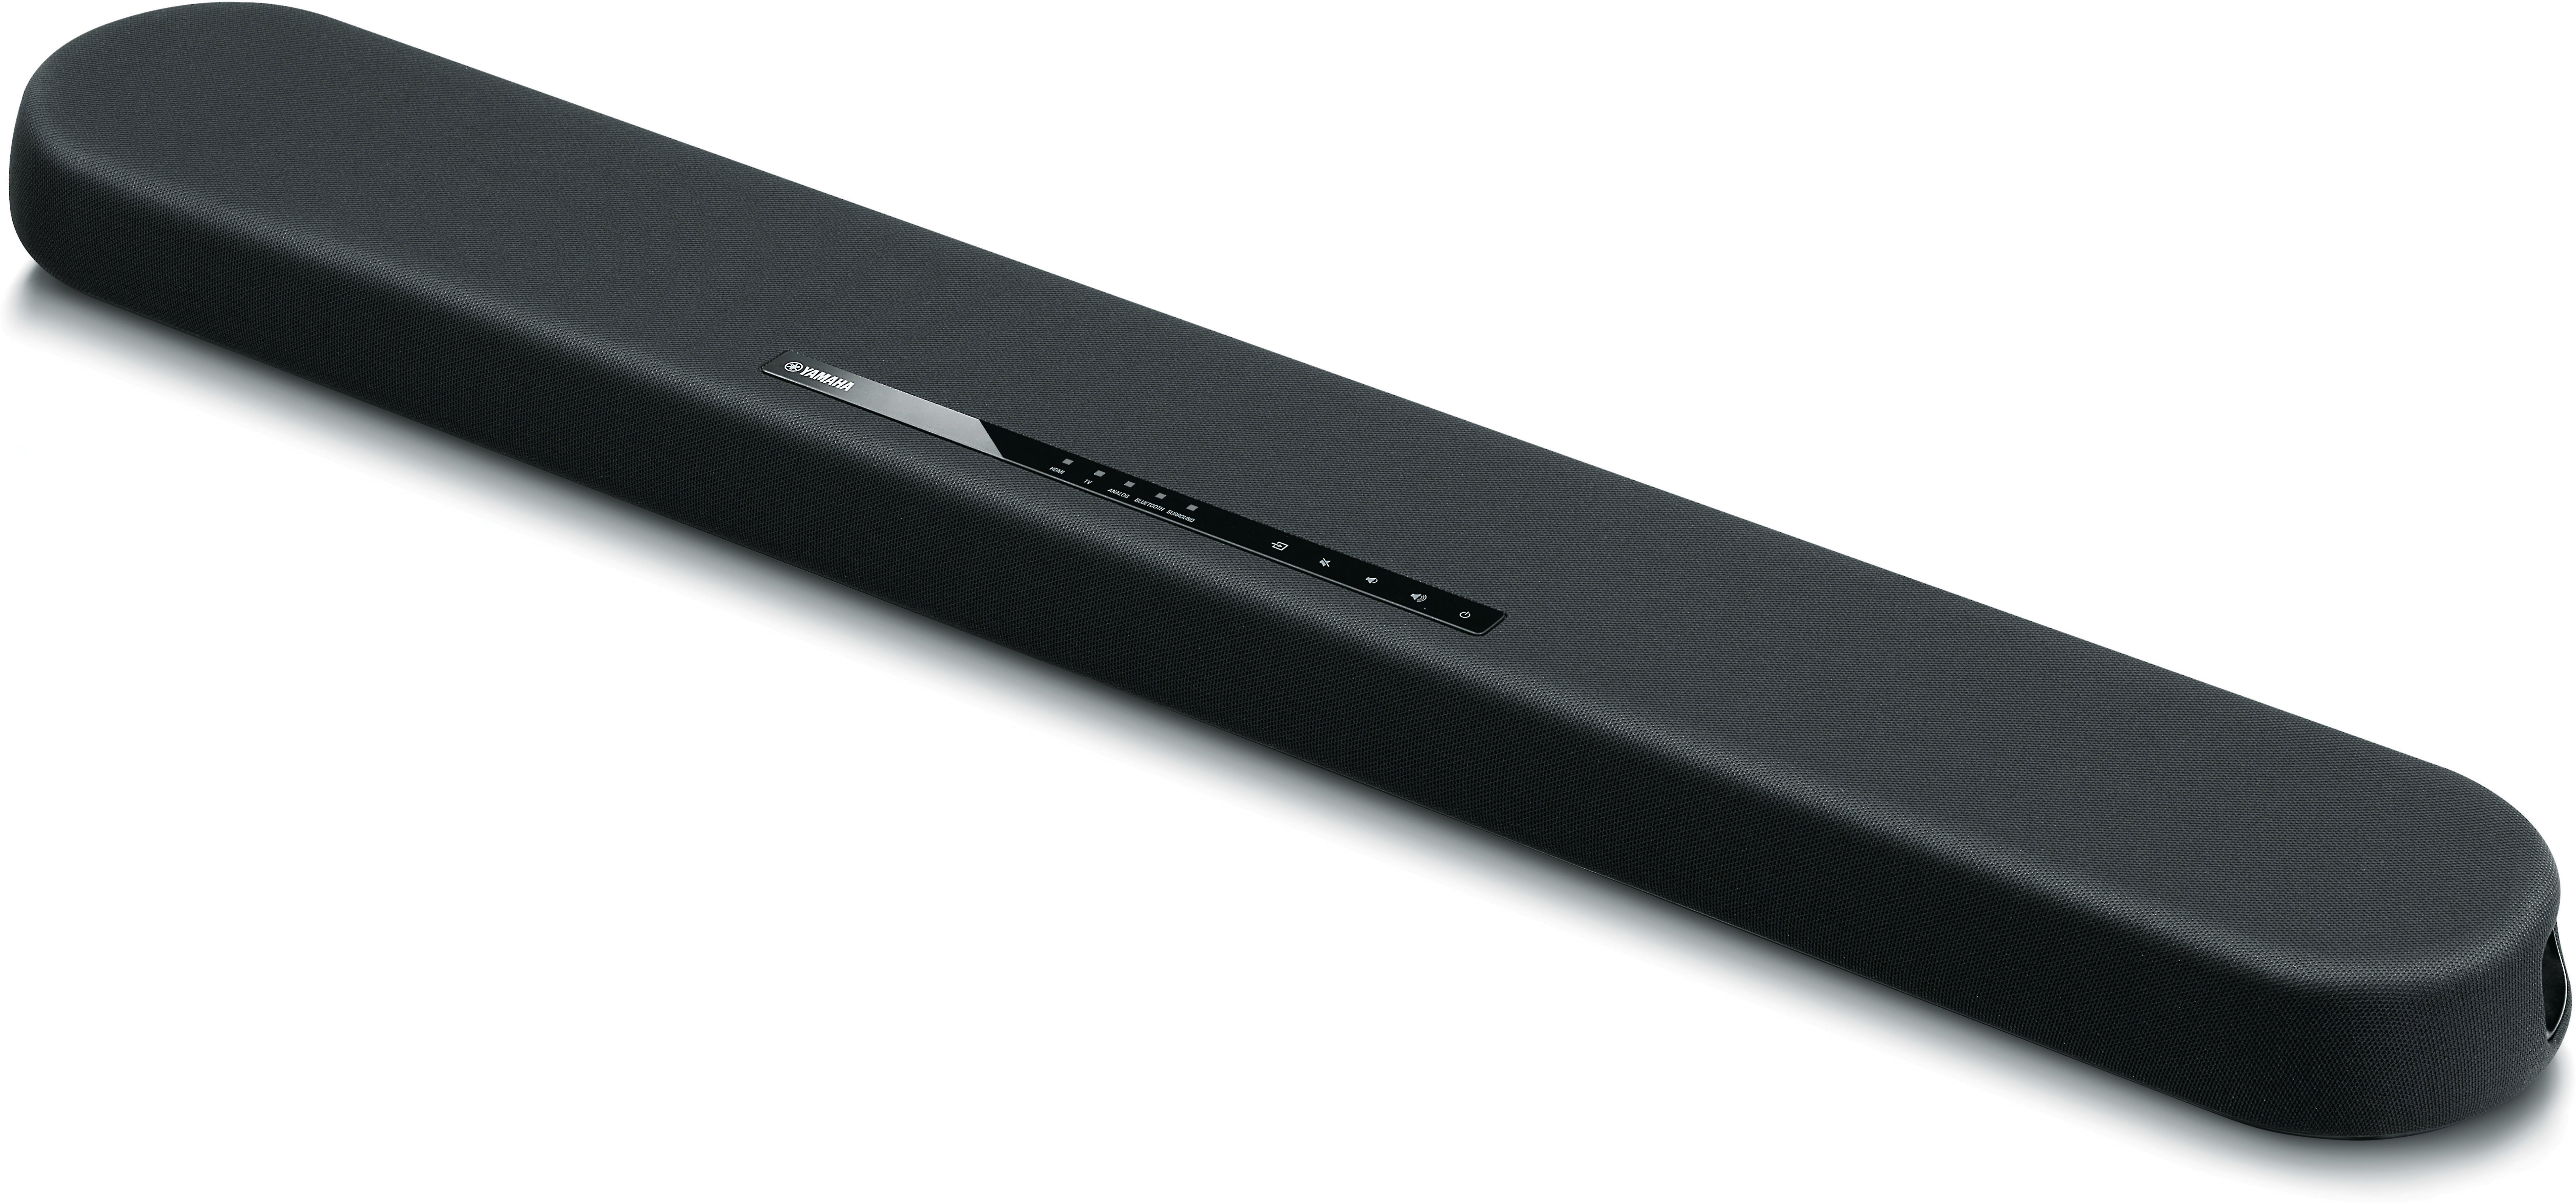 Customer Reviews: Yamaha YAS-108 Powered sound bar with built-in